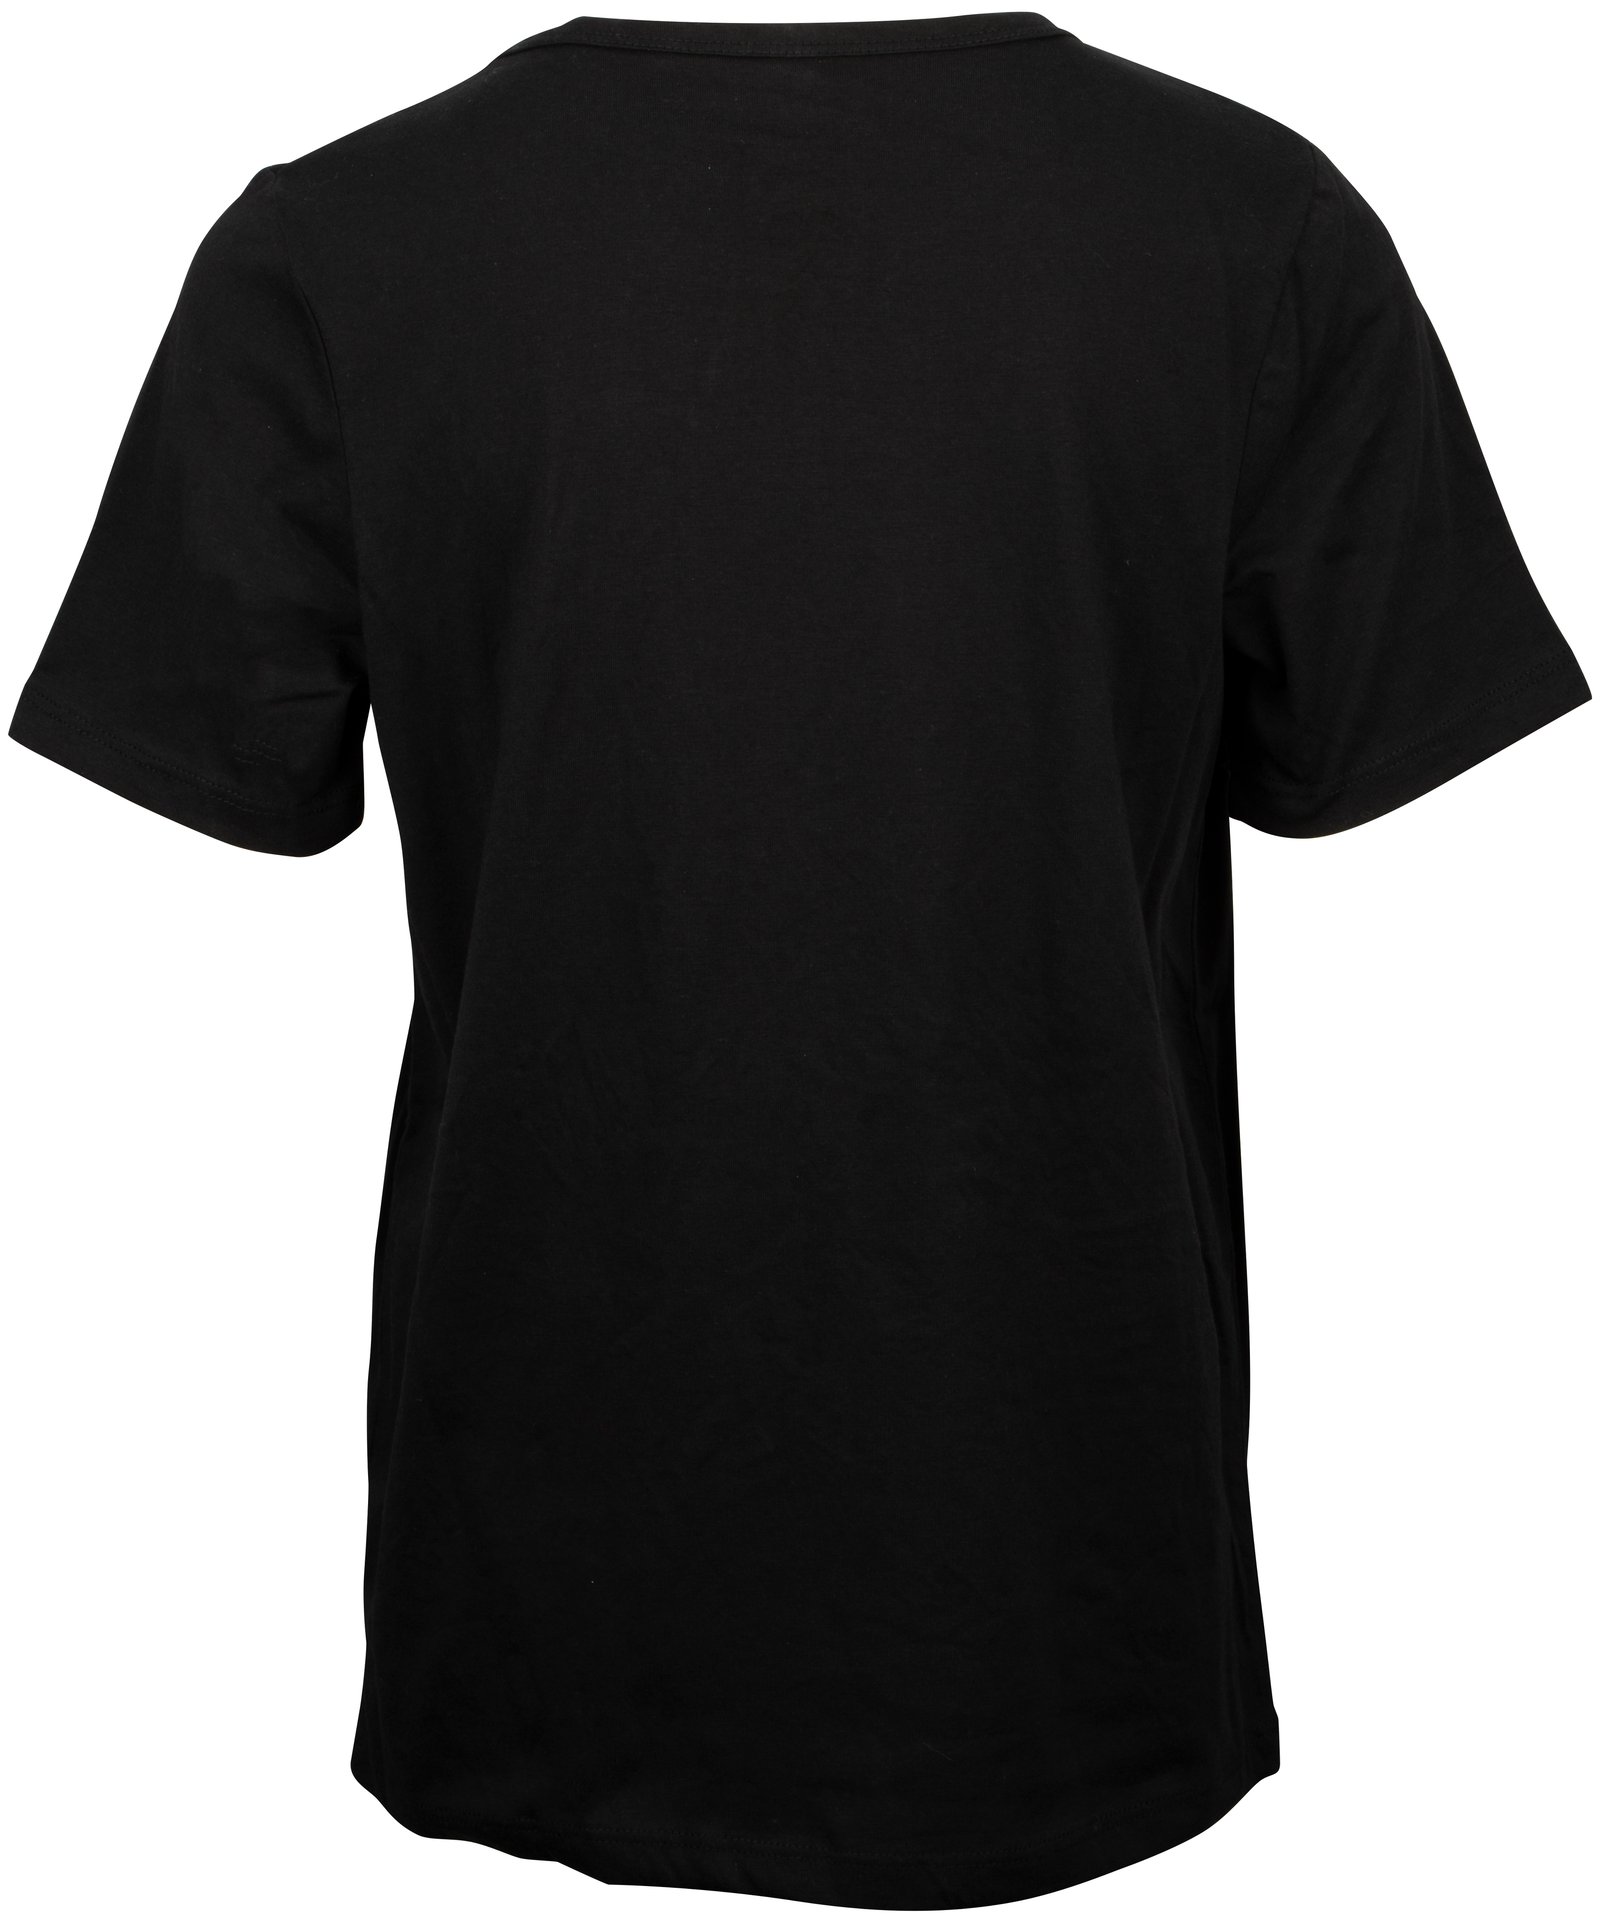 T-Shirt Sr - Emblem Black